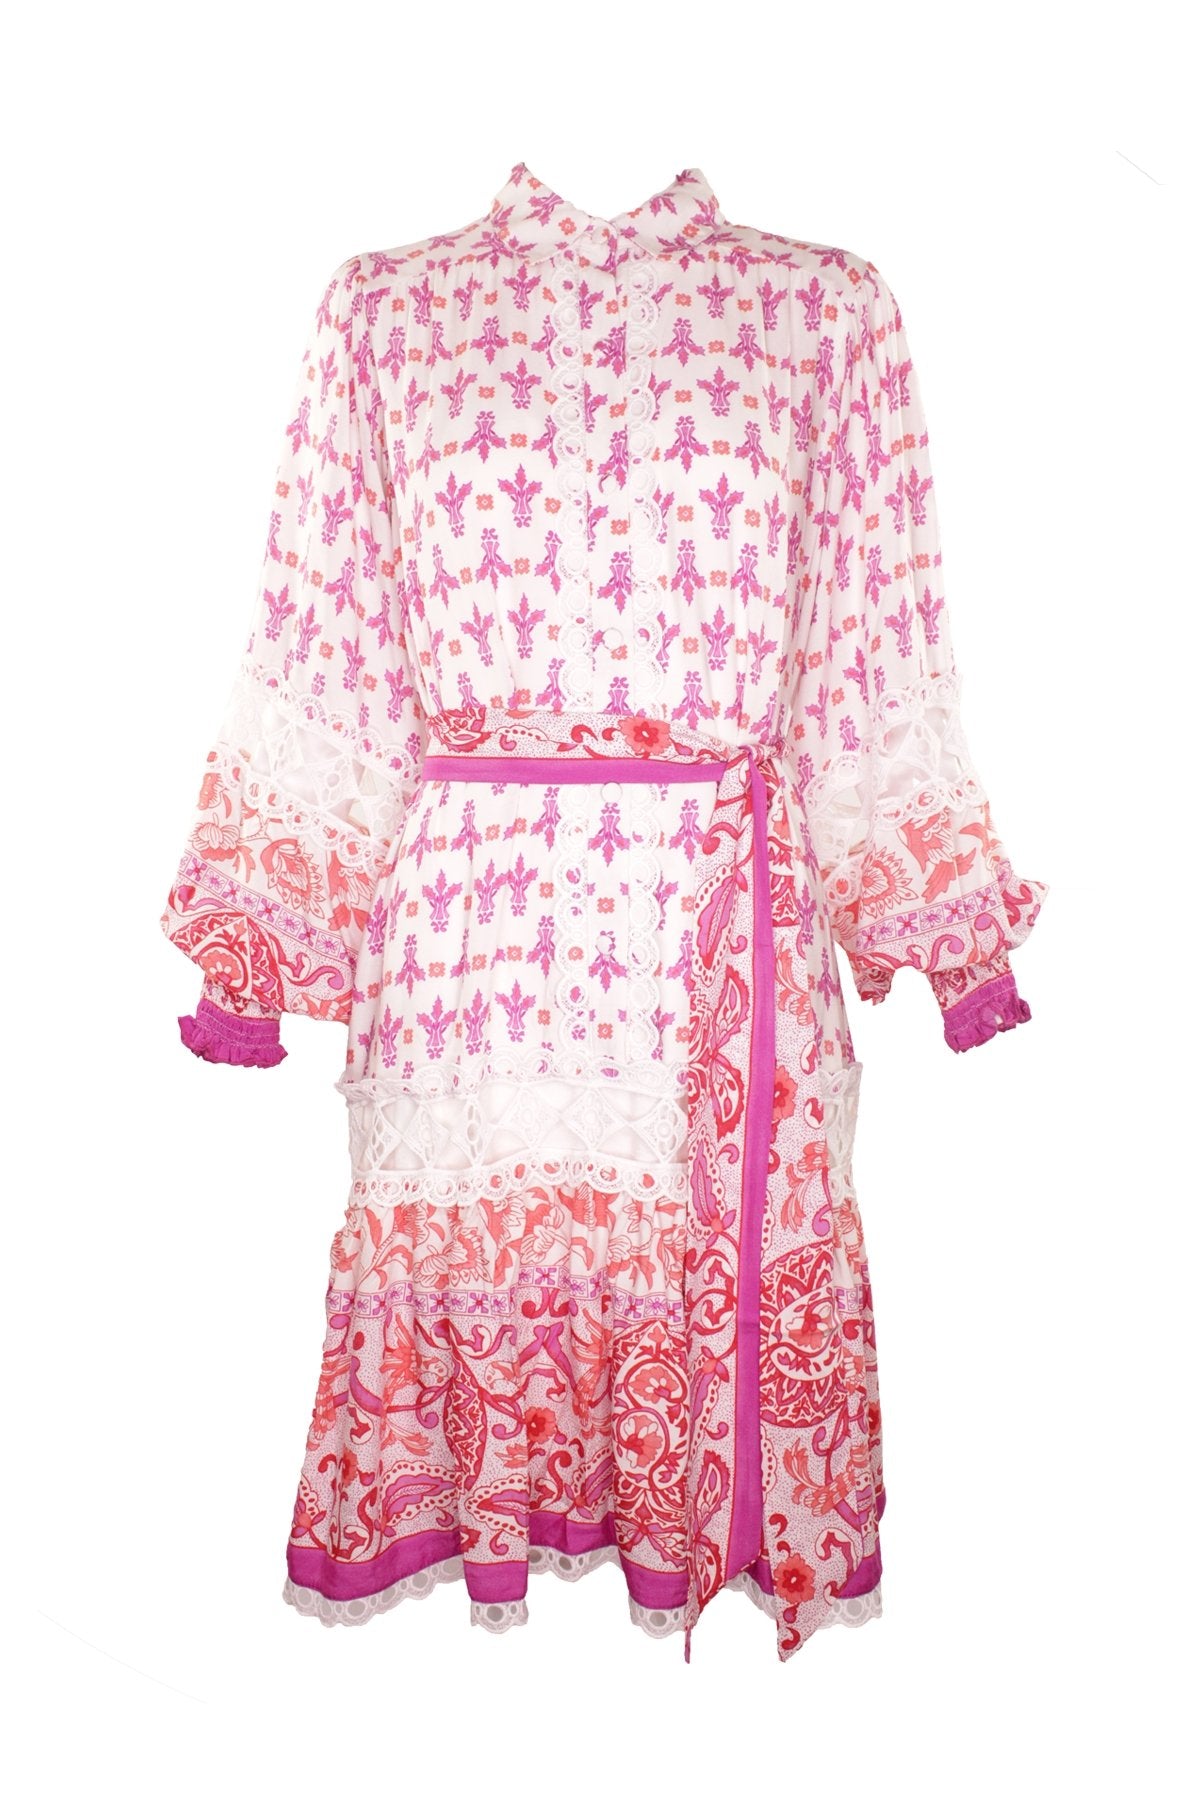 Lyvia Dress in White Pink - shop-olivia.com